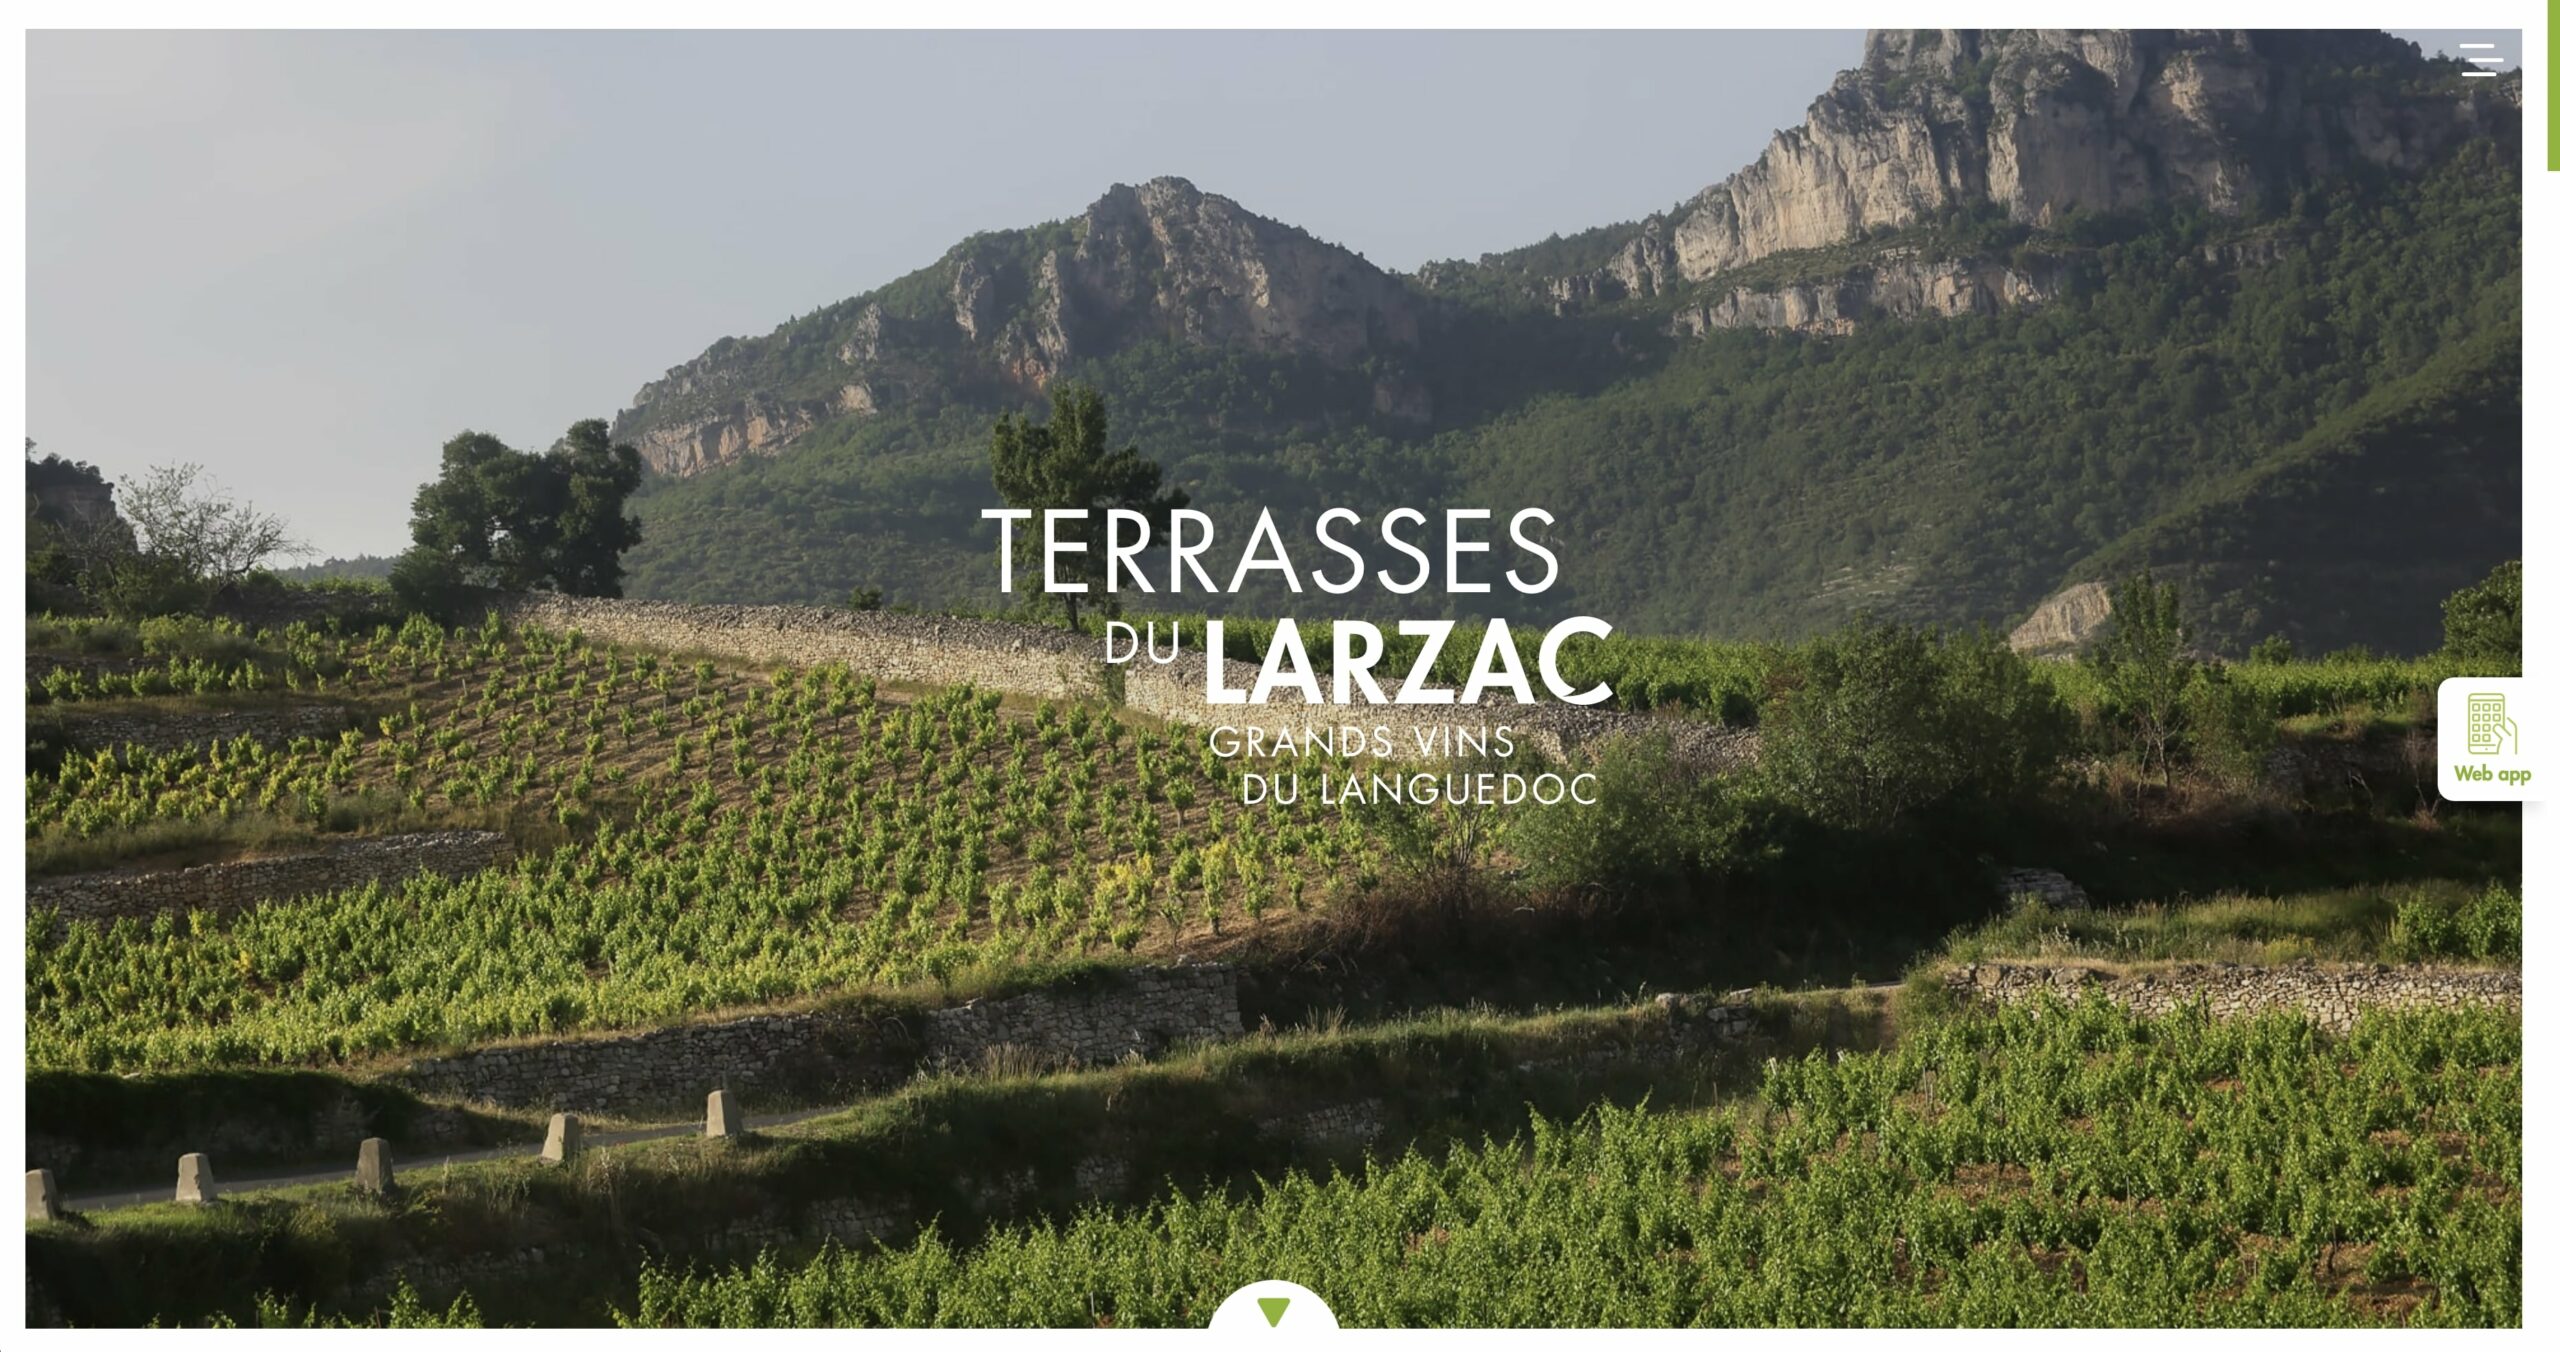 (c) Terrasses-du-larzac.com